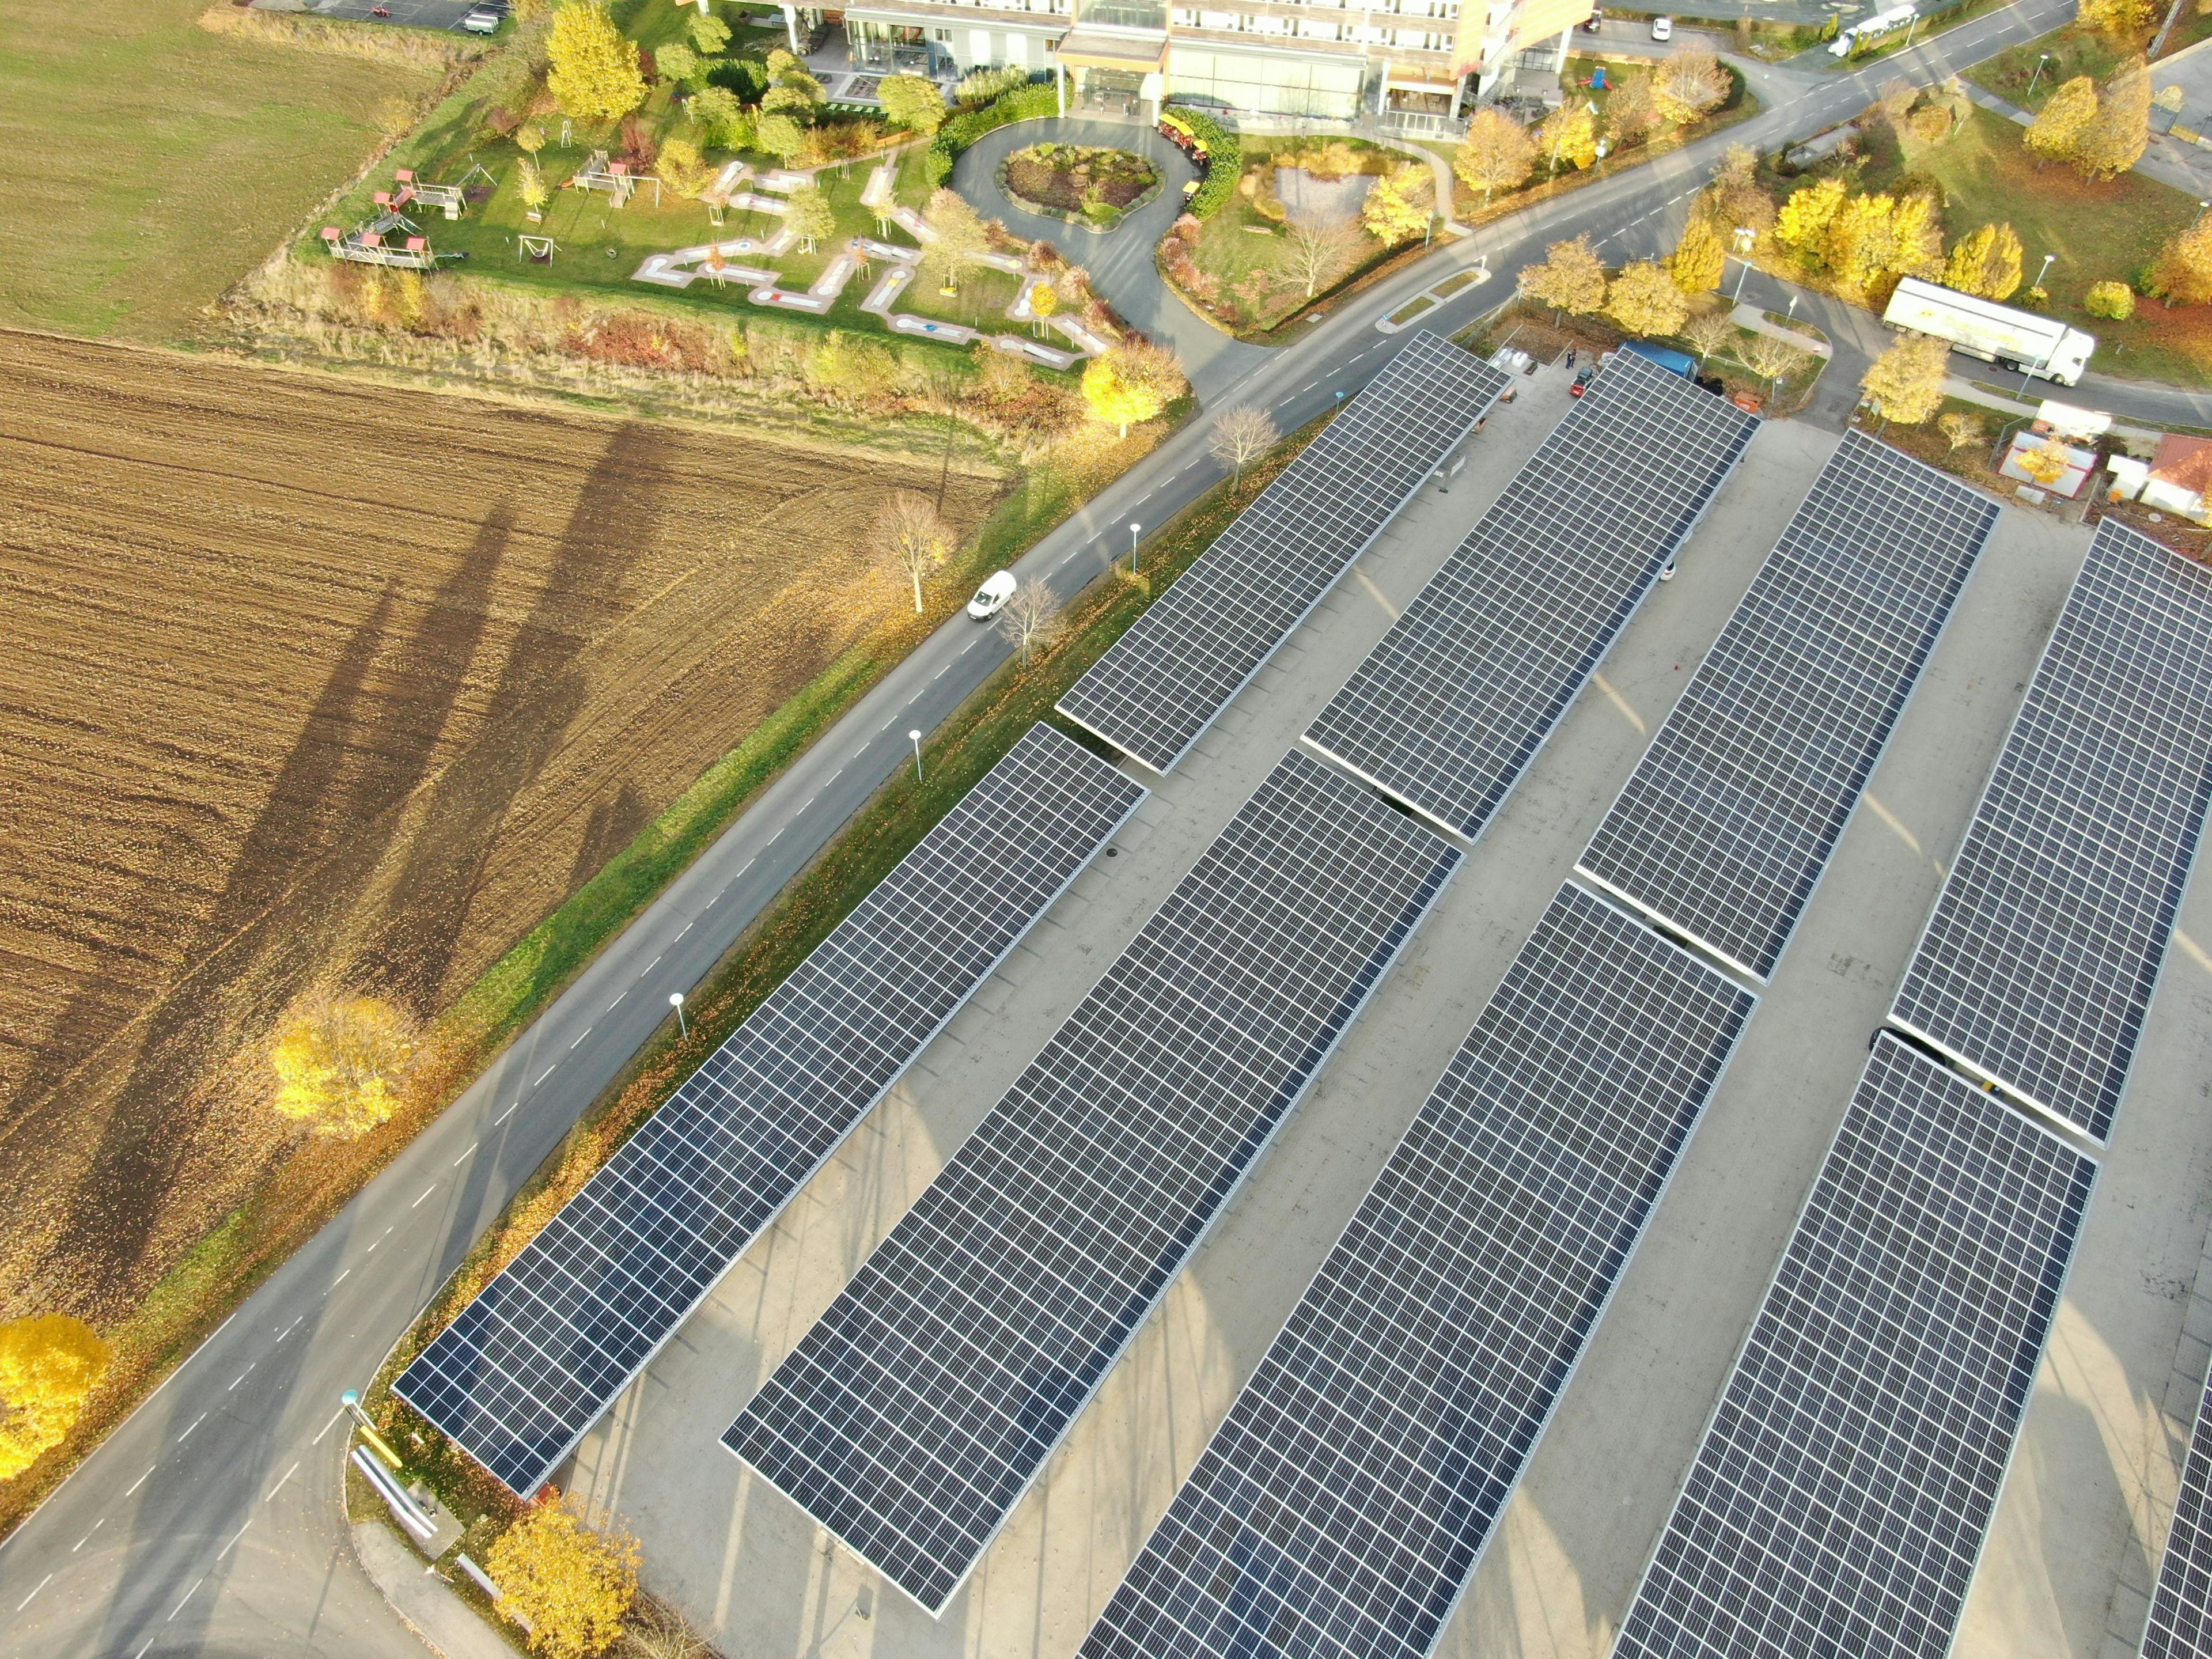 Solar carports: a modern way of utilising parking spaces